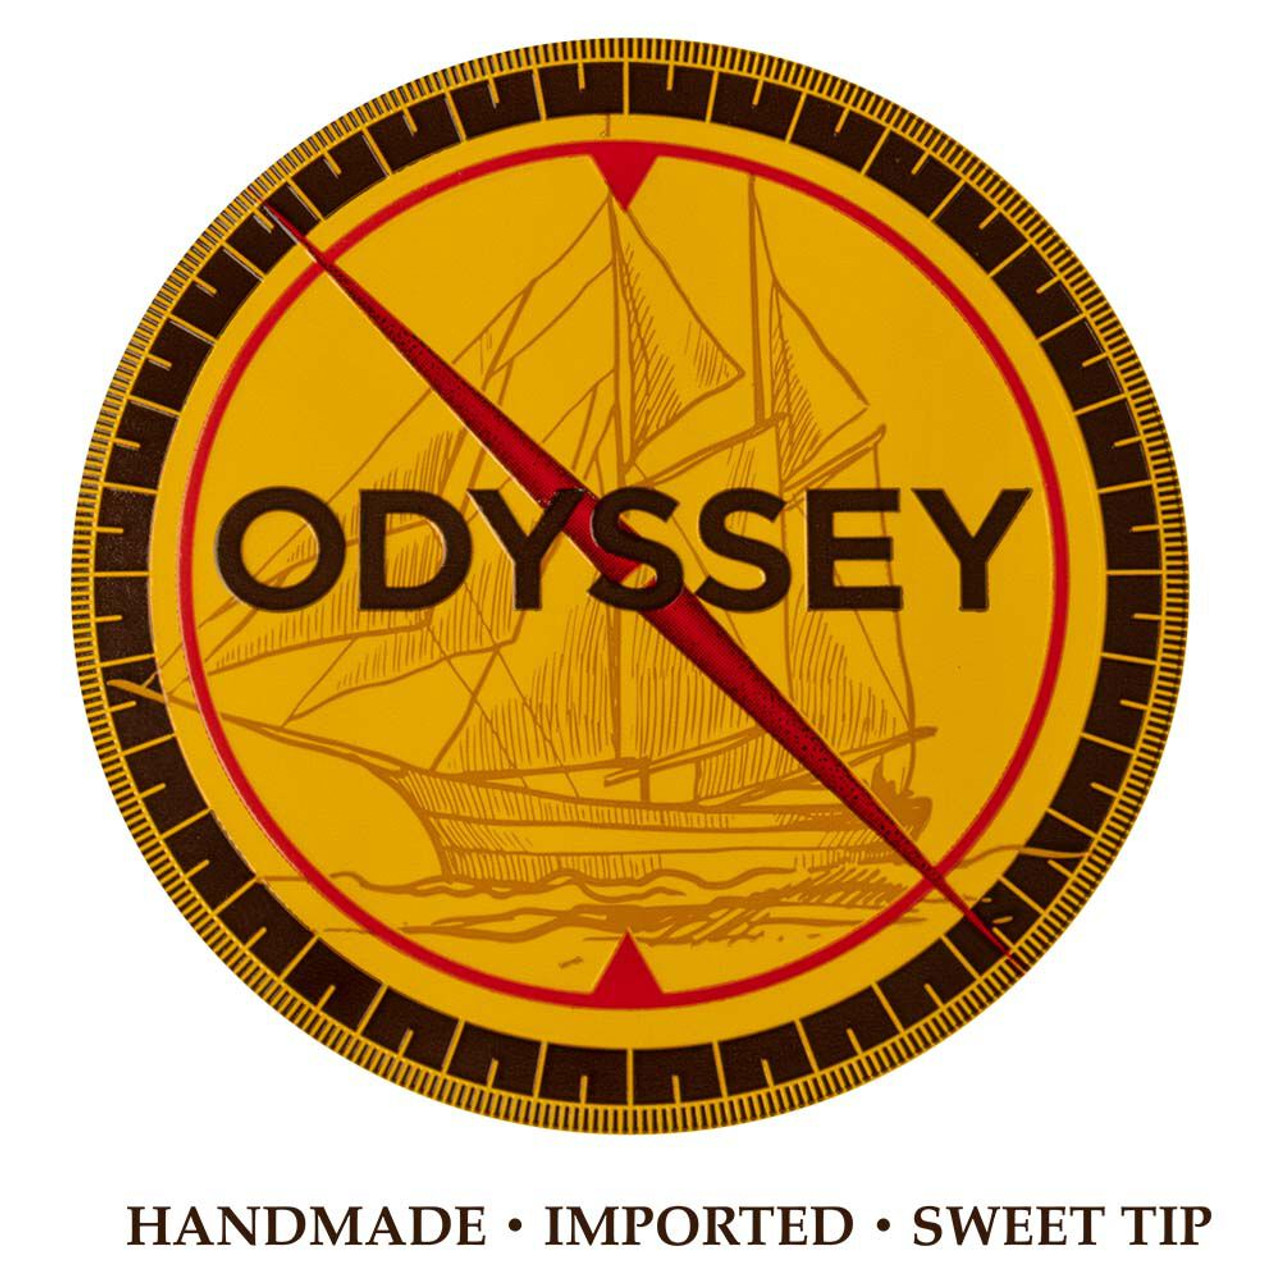 Odyssey Sweet Tip Churchill Cigars - 7 x 48 (Bundle of 20)